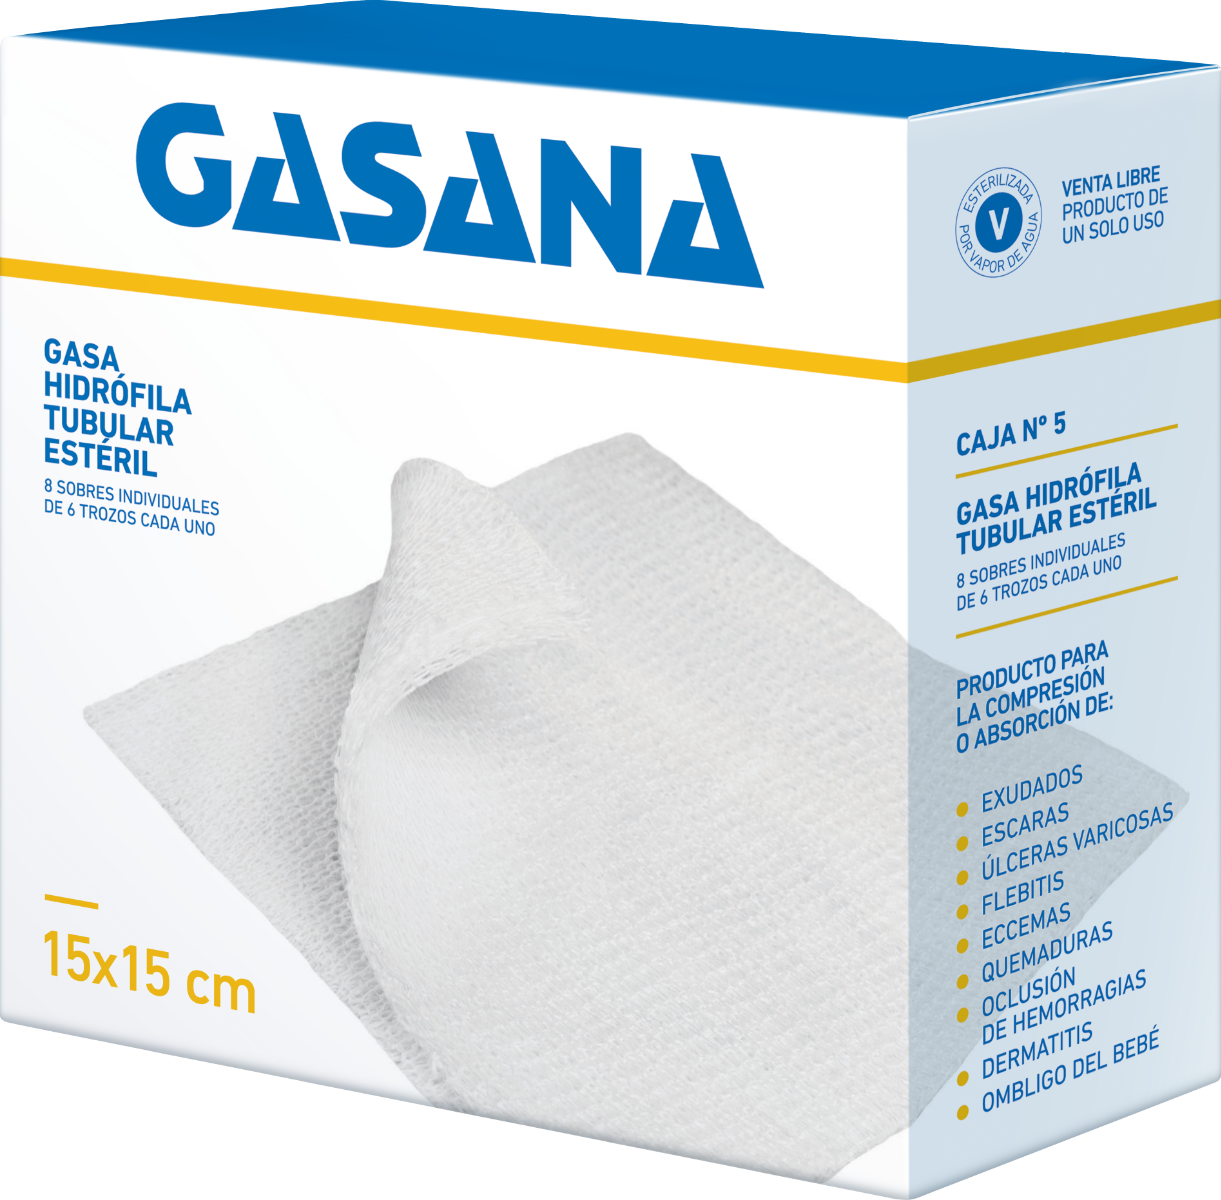 Gasana Gauze N5 Box 15X15 Cm - 8 Individual Envelopes of 6 Pieces, 100% Cotton for Wound Care, Bandaging & Dressing